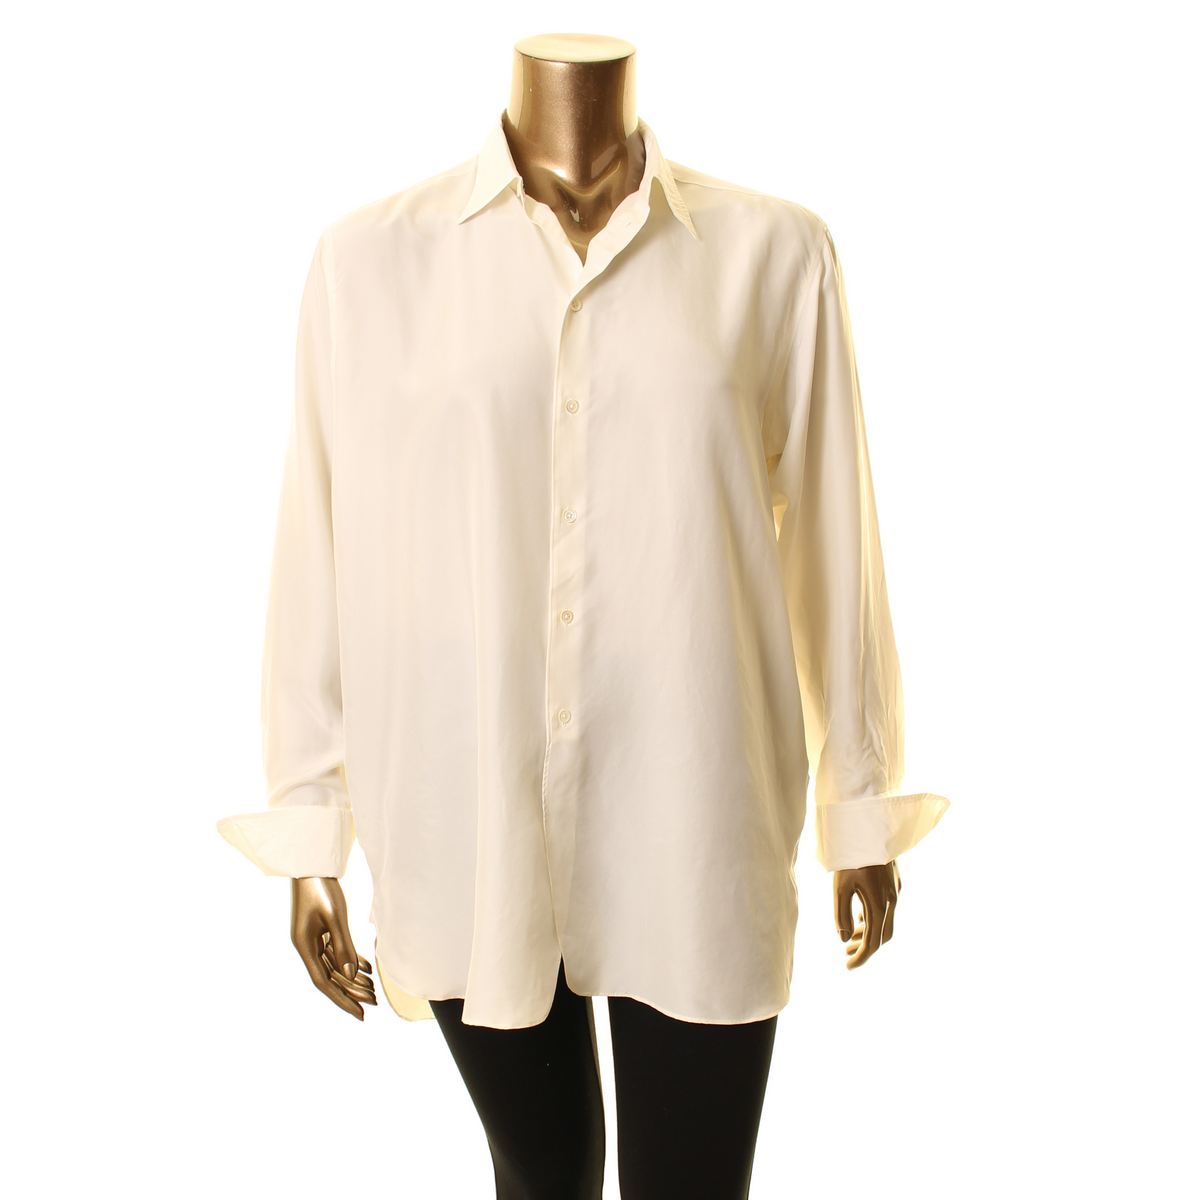 ralph lauren white button down shirt